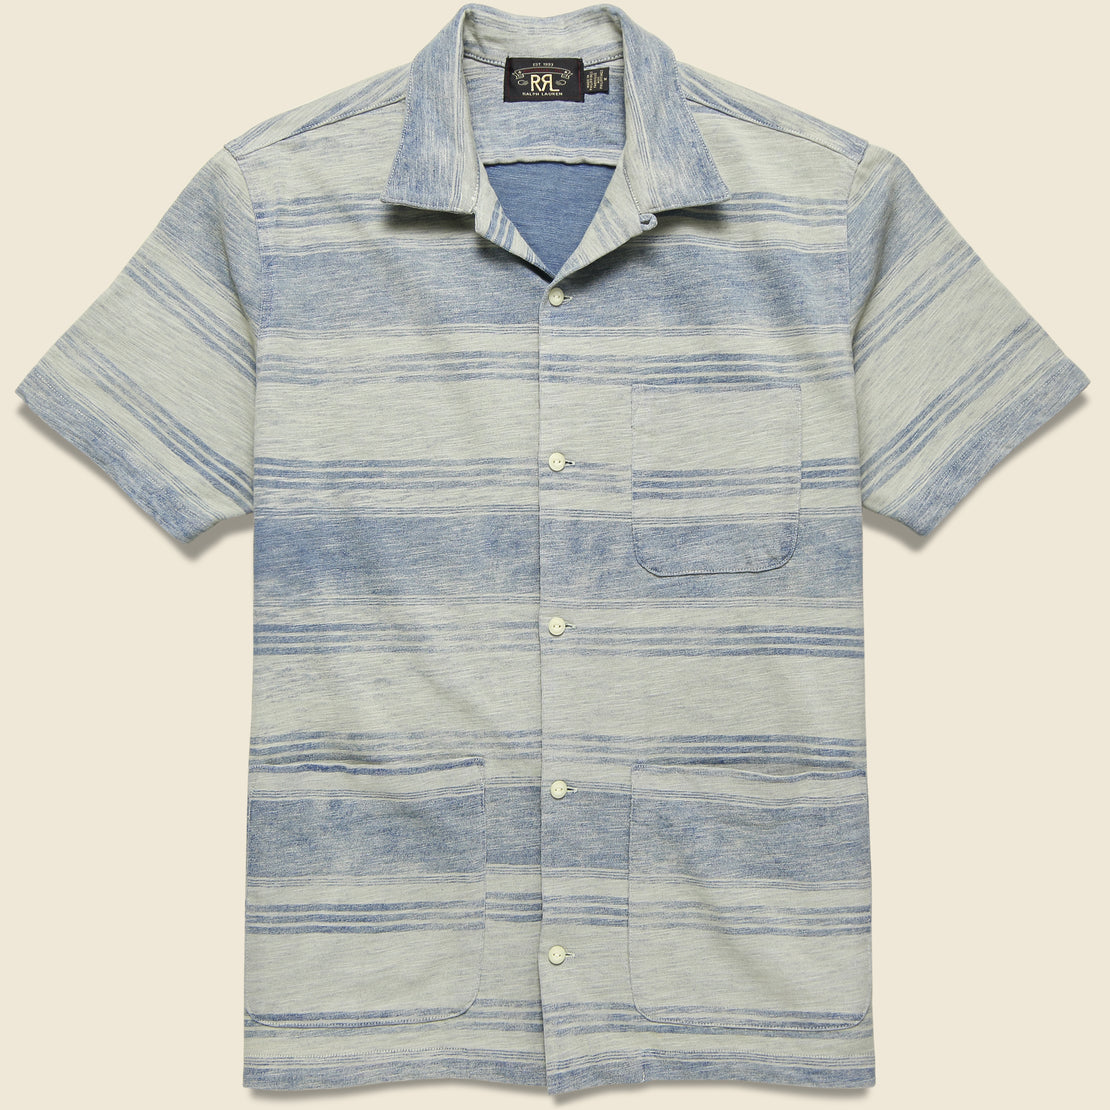 RRL 3 Pocket Jersey Camp Shirt - Indigo/Cream Stripe